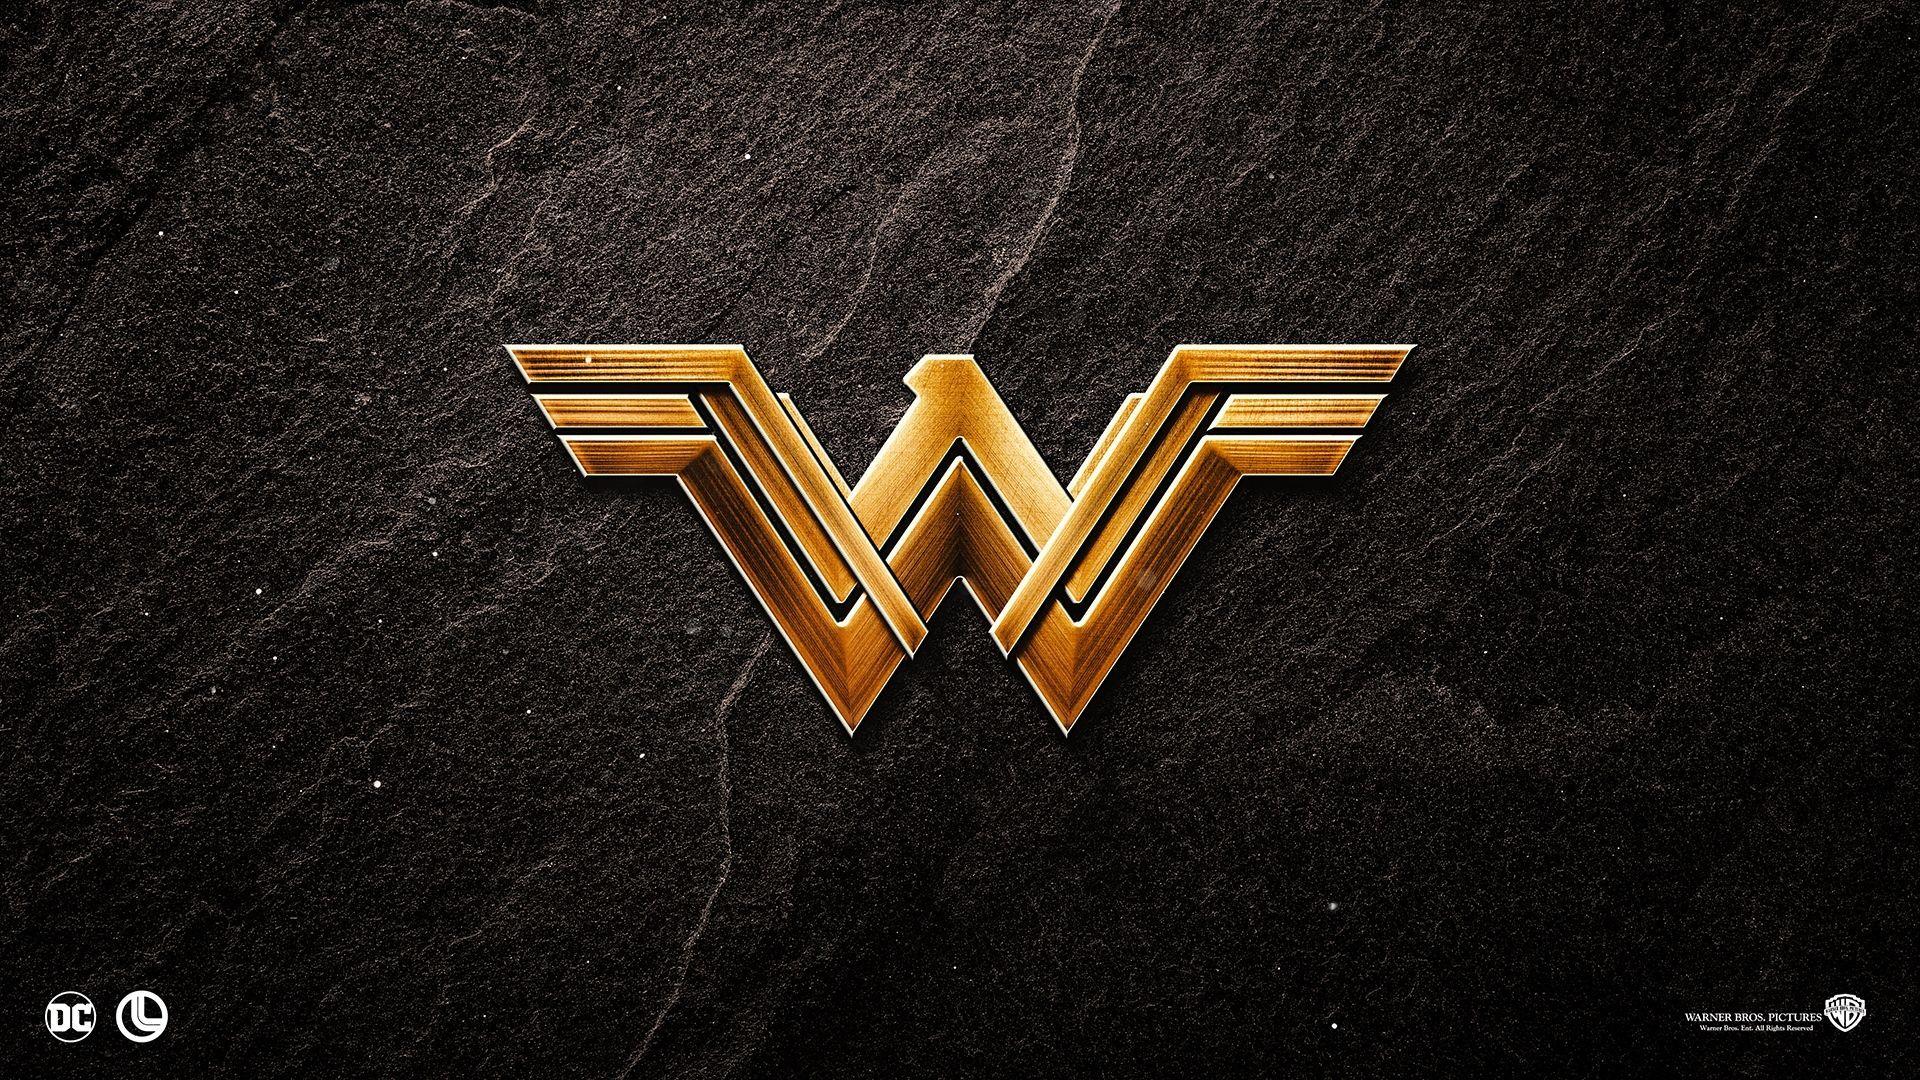 Cool Movie Logo - Cool Wonder Woman Logo Movie 2017 1920x1080 wallpaper. Wonder Woman